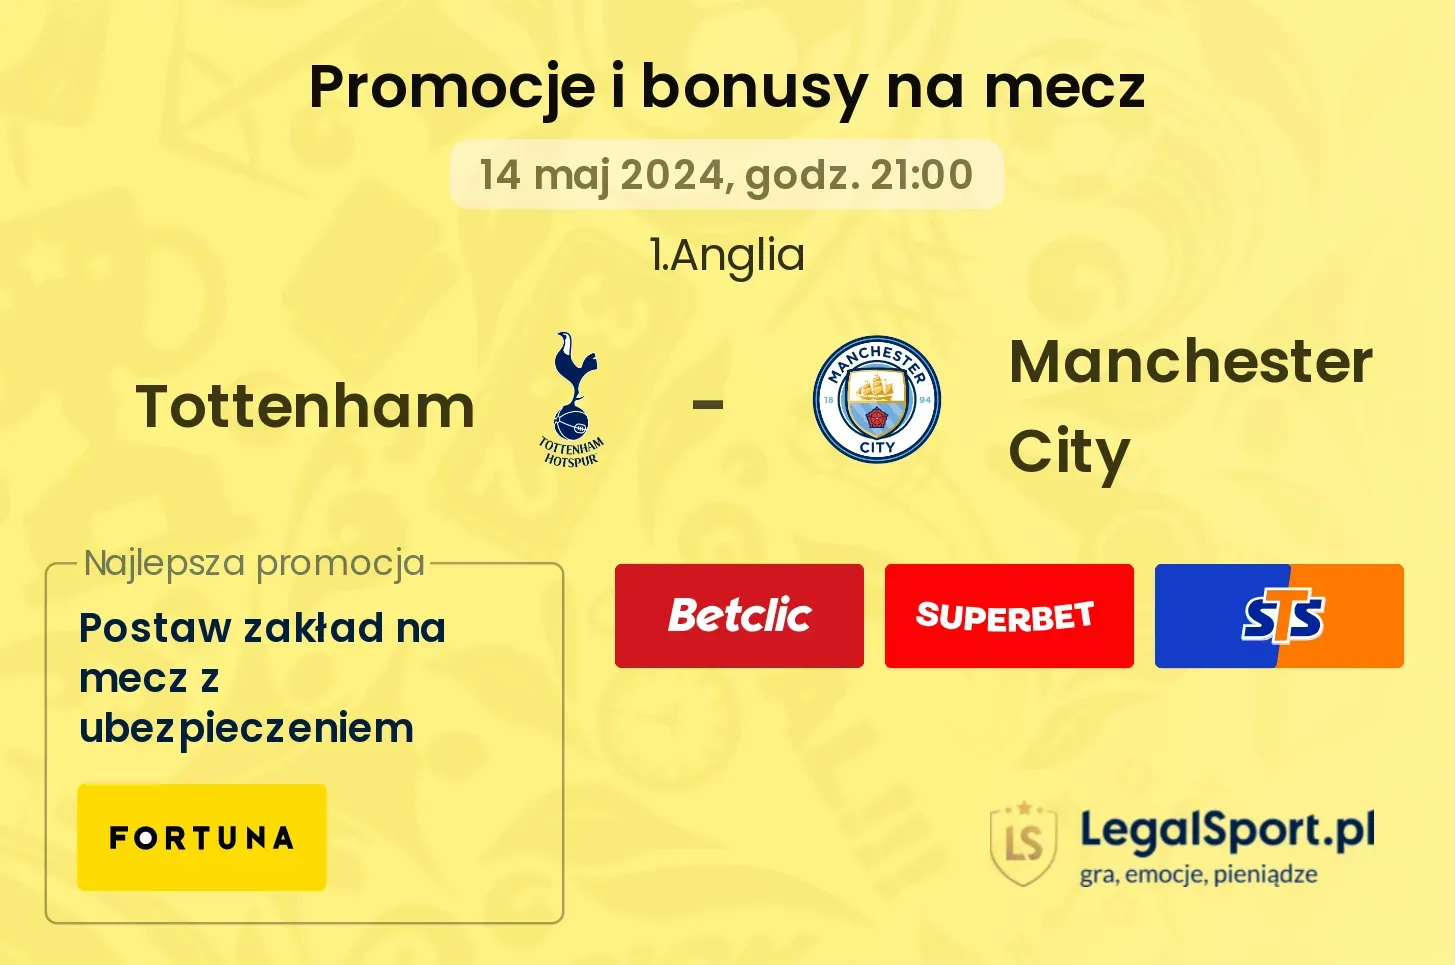 Tottenham - Manchester City promocje i bonusy (14.05, 21:00)